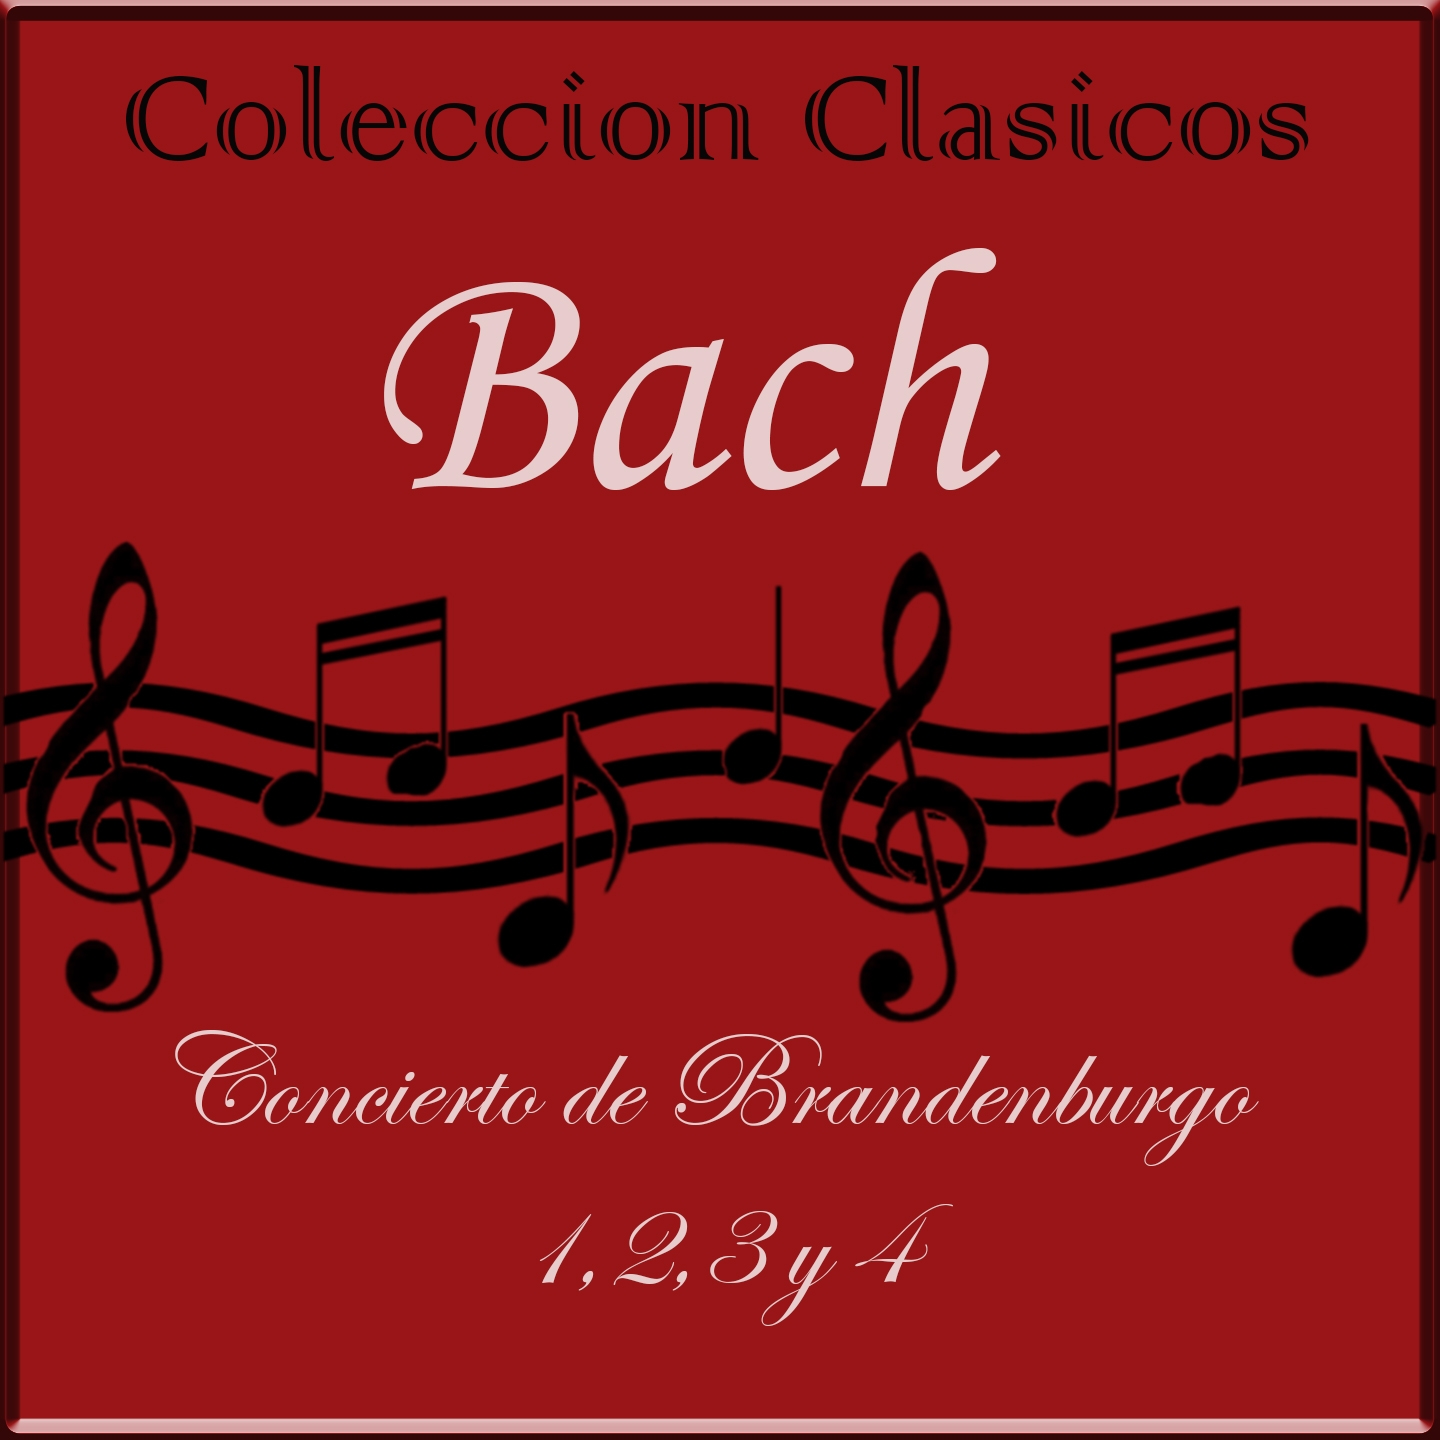 Brandenburg Concertos, No. 4 in G Major, BWV 1049: I. Allegro